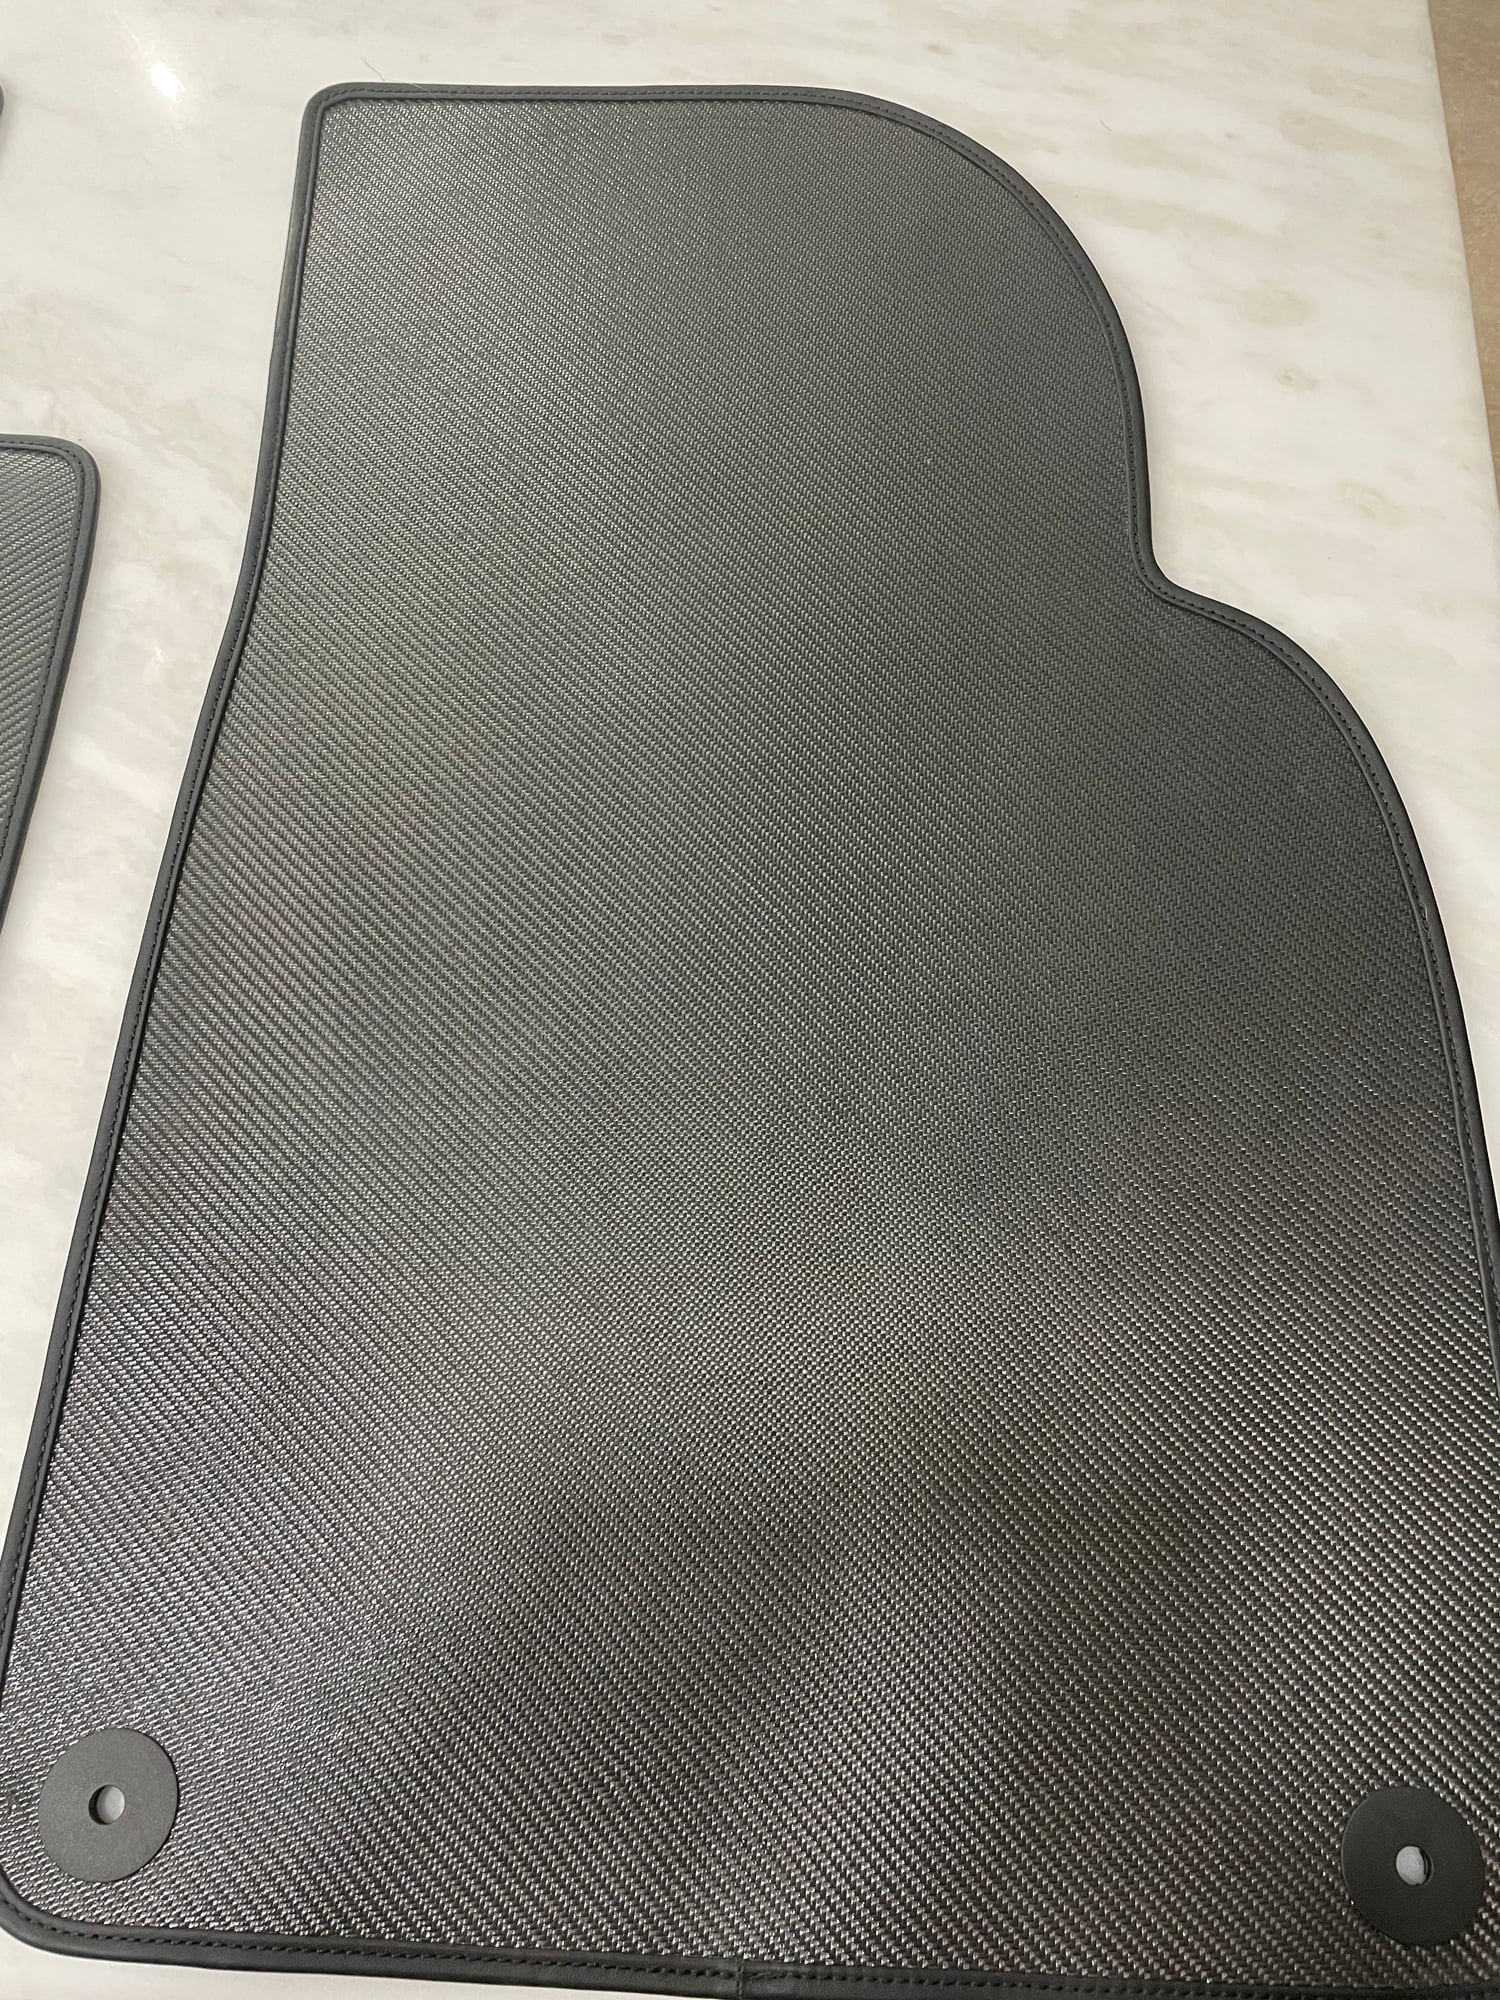 Accessories - OEM carbon fiber floor mats - Used - 2013 to 2019 Porsche 911 - Wellington, FL 33414, United States